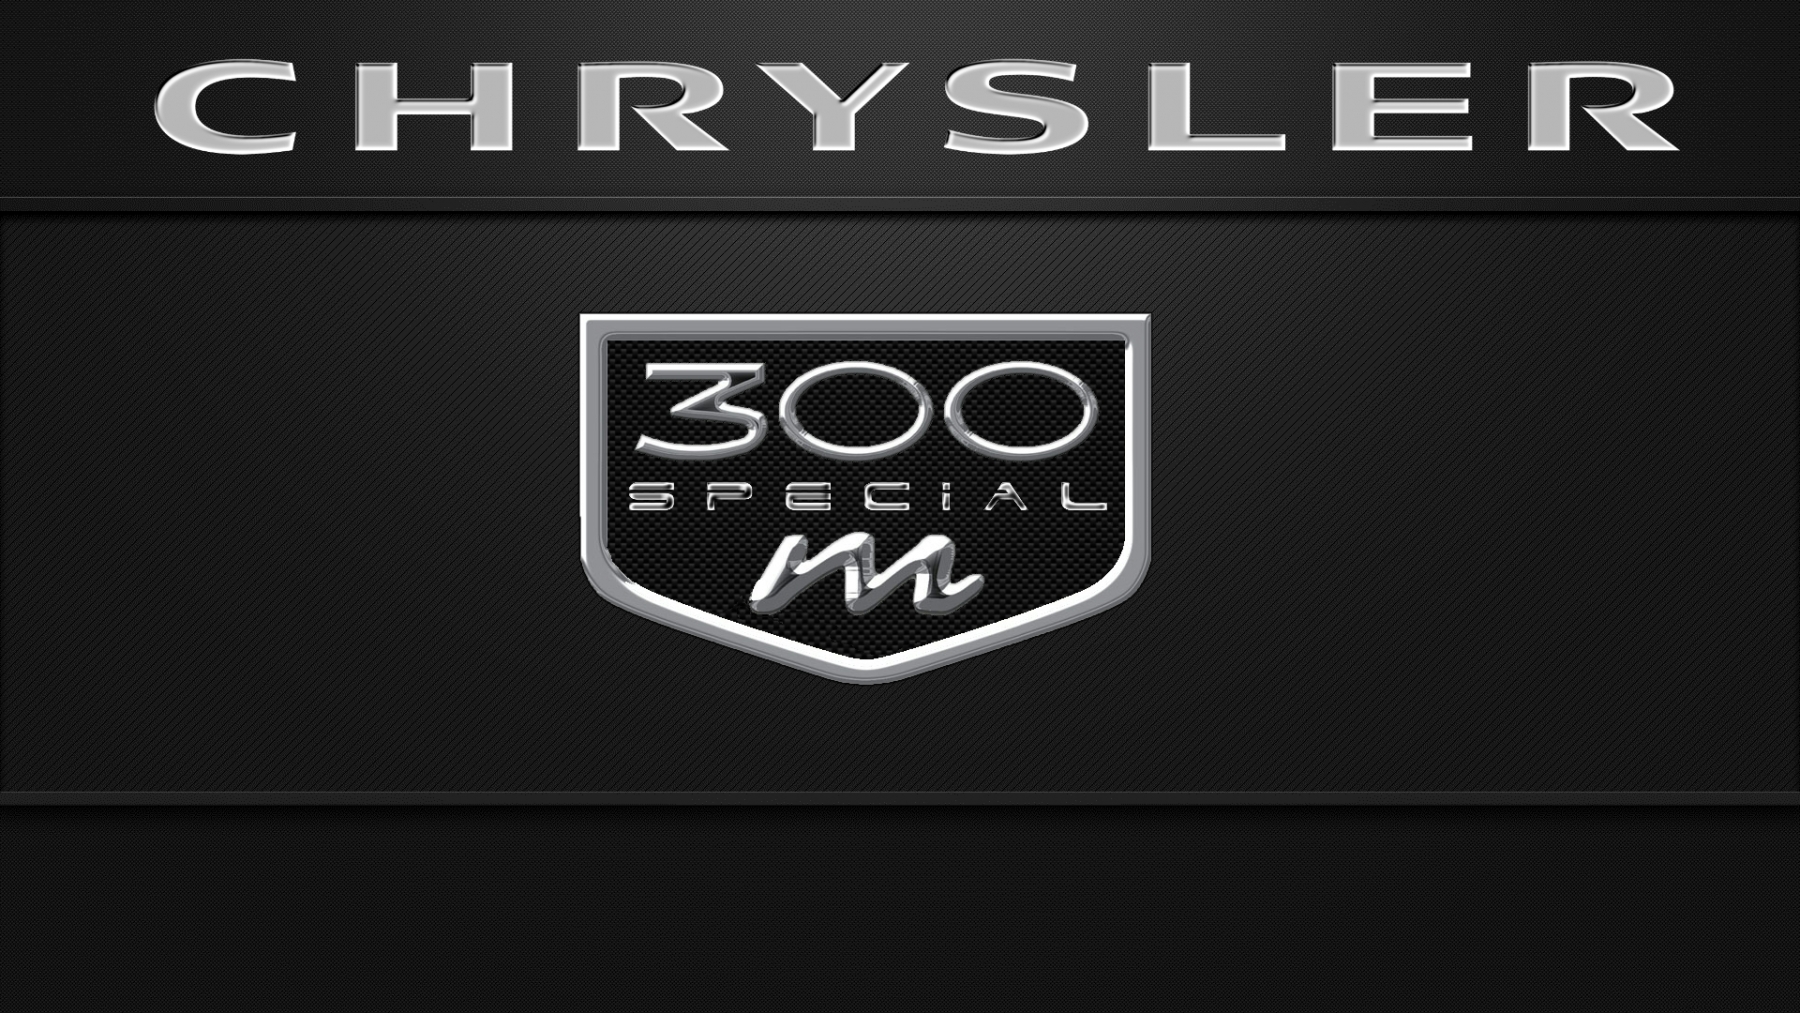 Chrysler Logo HD Wallpaper Background Image Photos